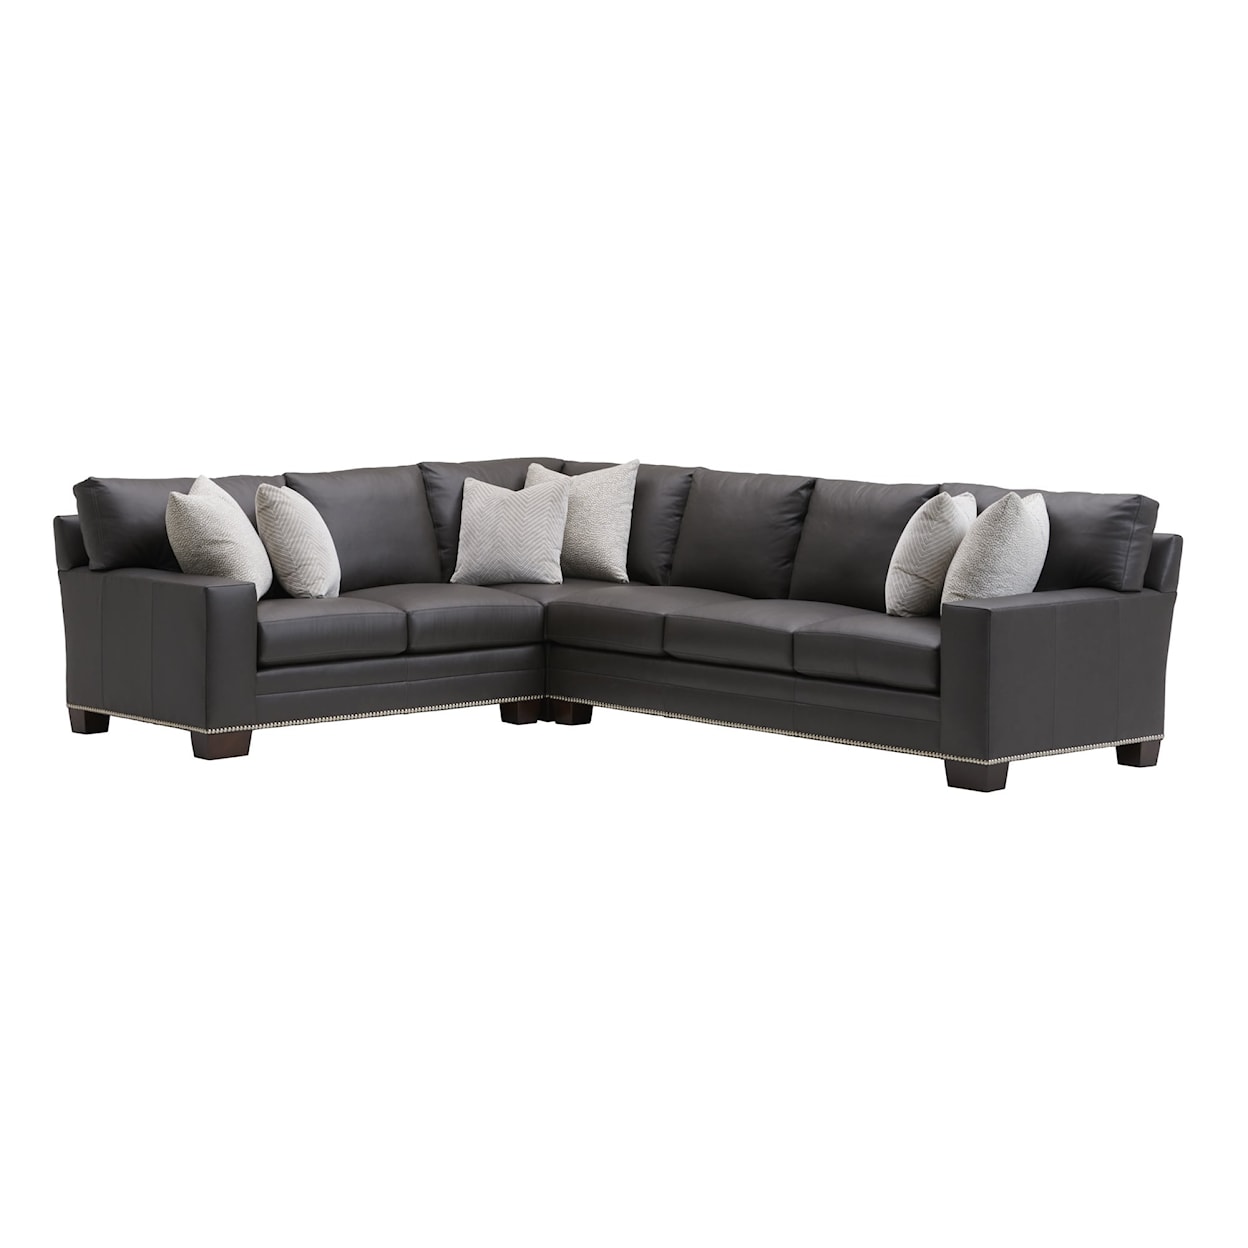 Lexington Couture Leather Braxton Customizable 5-Seat Sectional Sofa